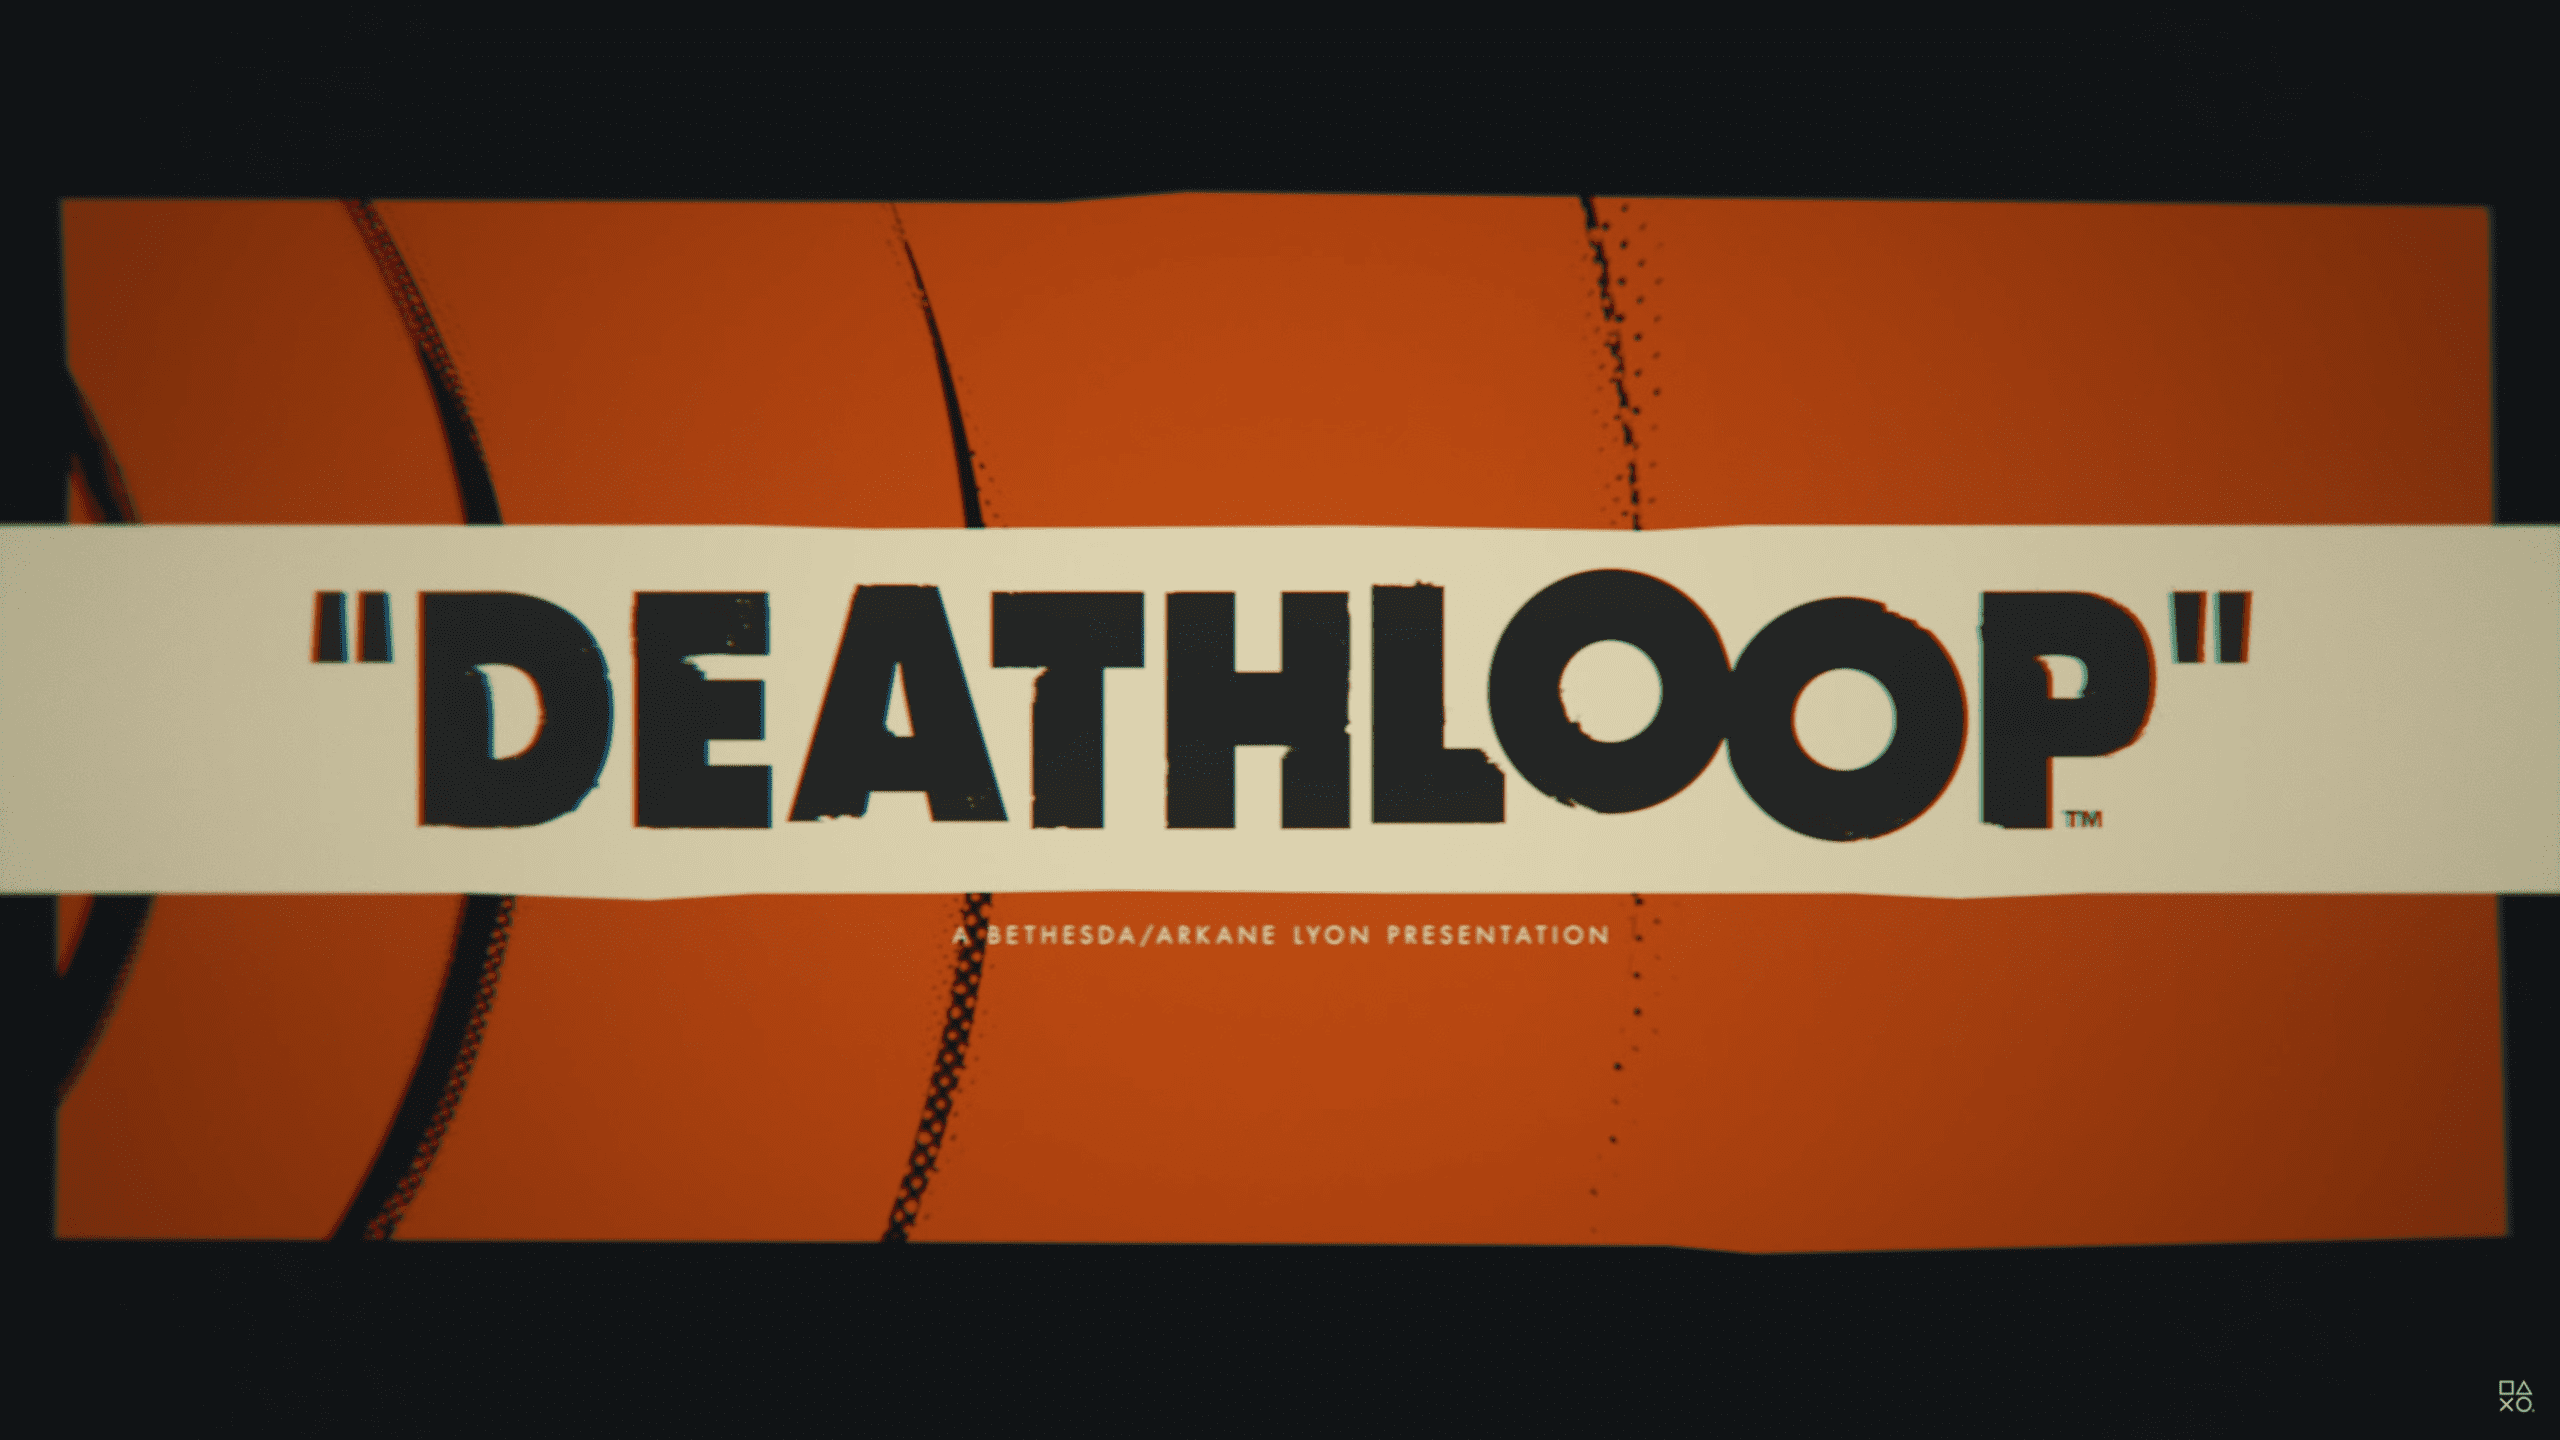 Deathloop Featured Image